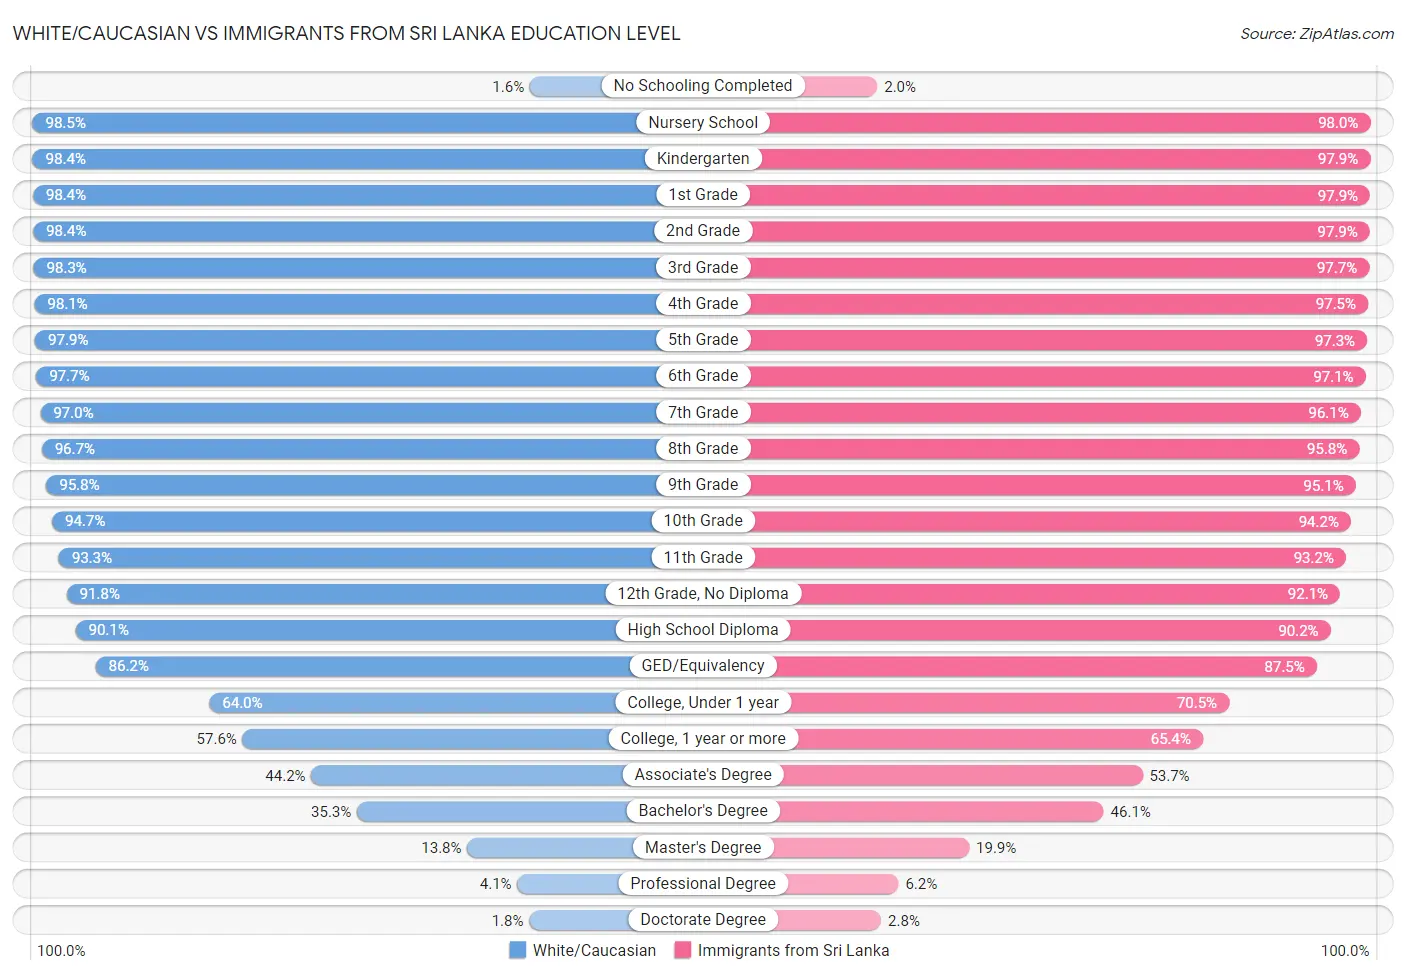 White/Caucasian vs Immigrants from Sri Lanka Education Level